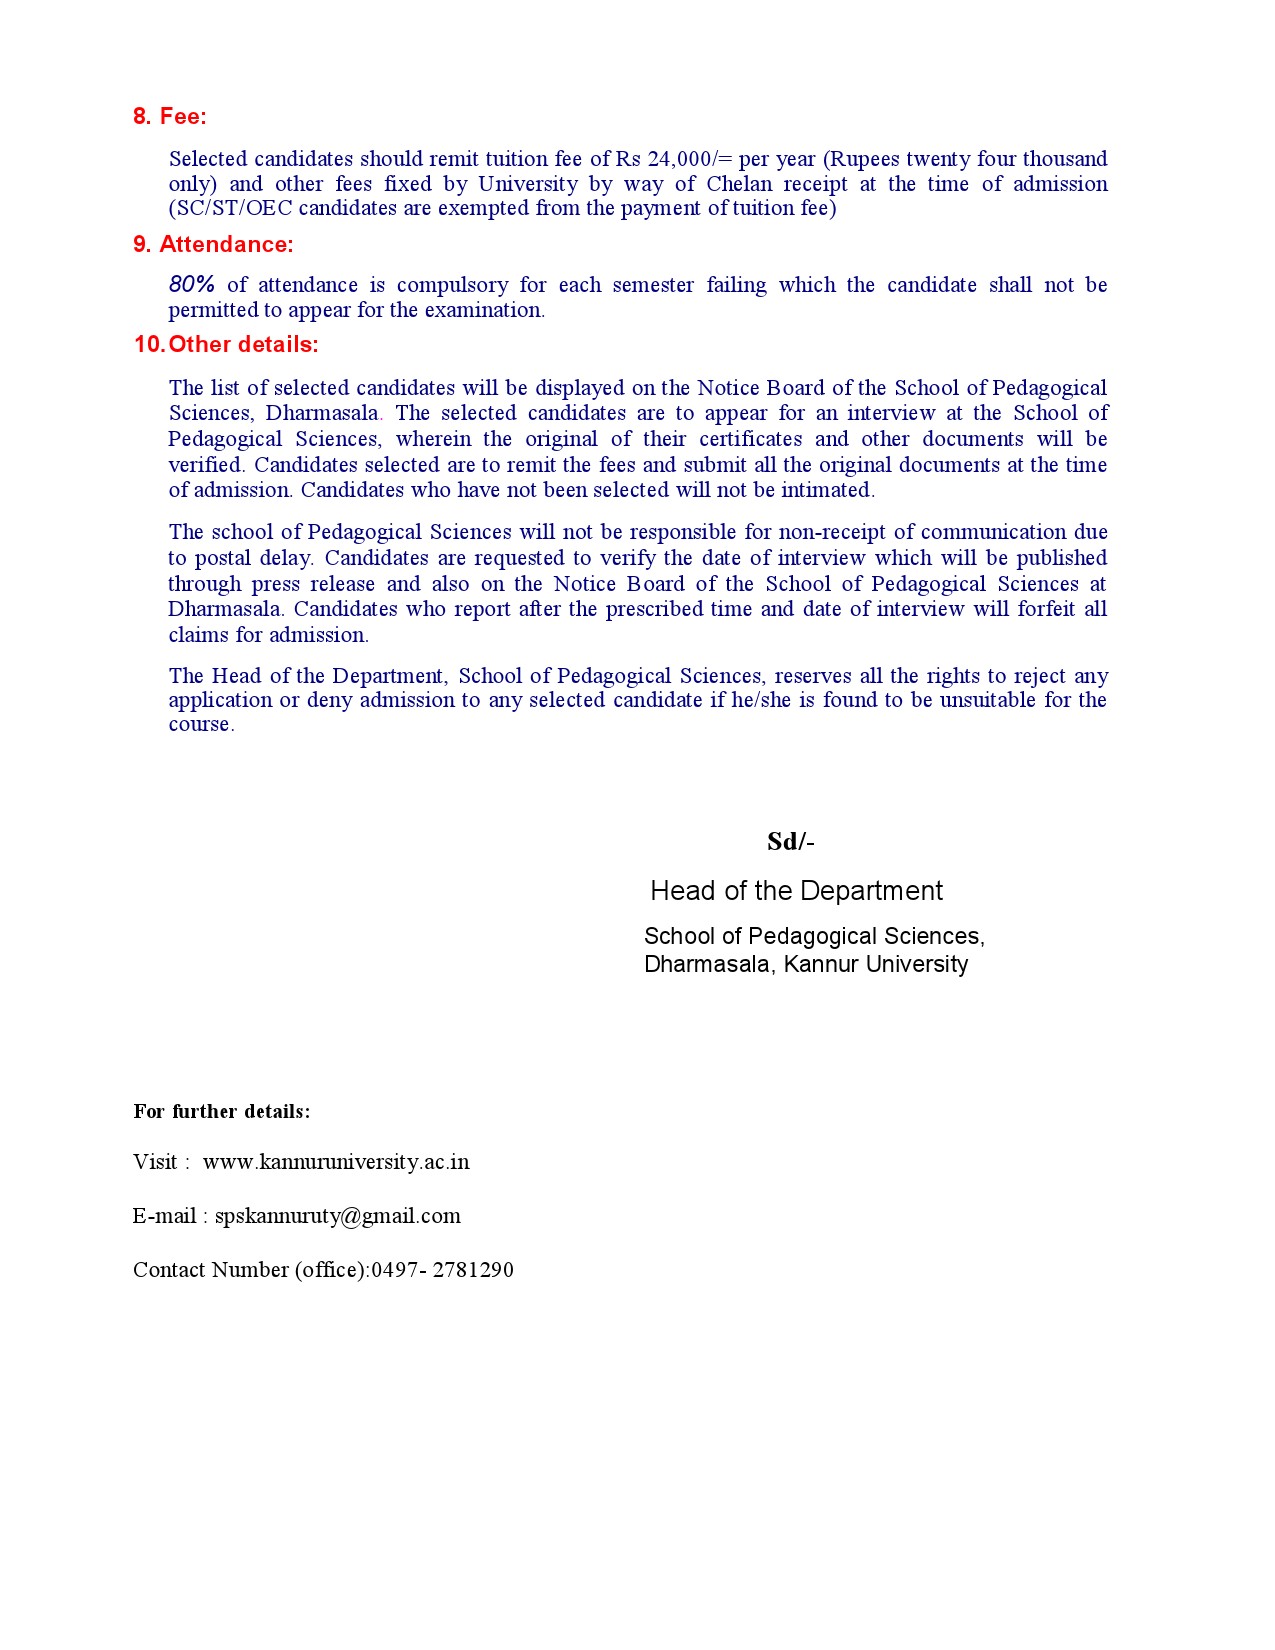 Kannur University M Ed Admission Prospectus 2019 - Notification Image 5